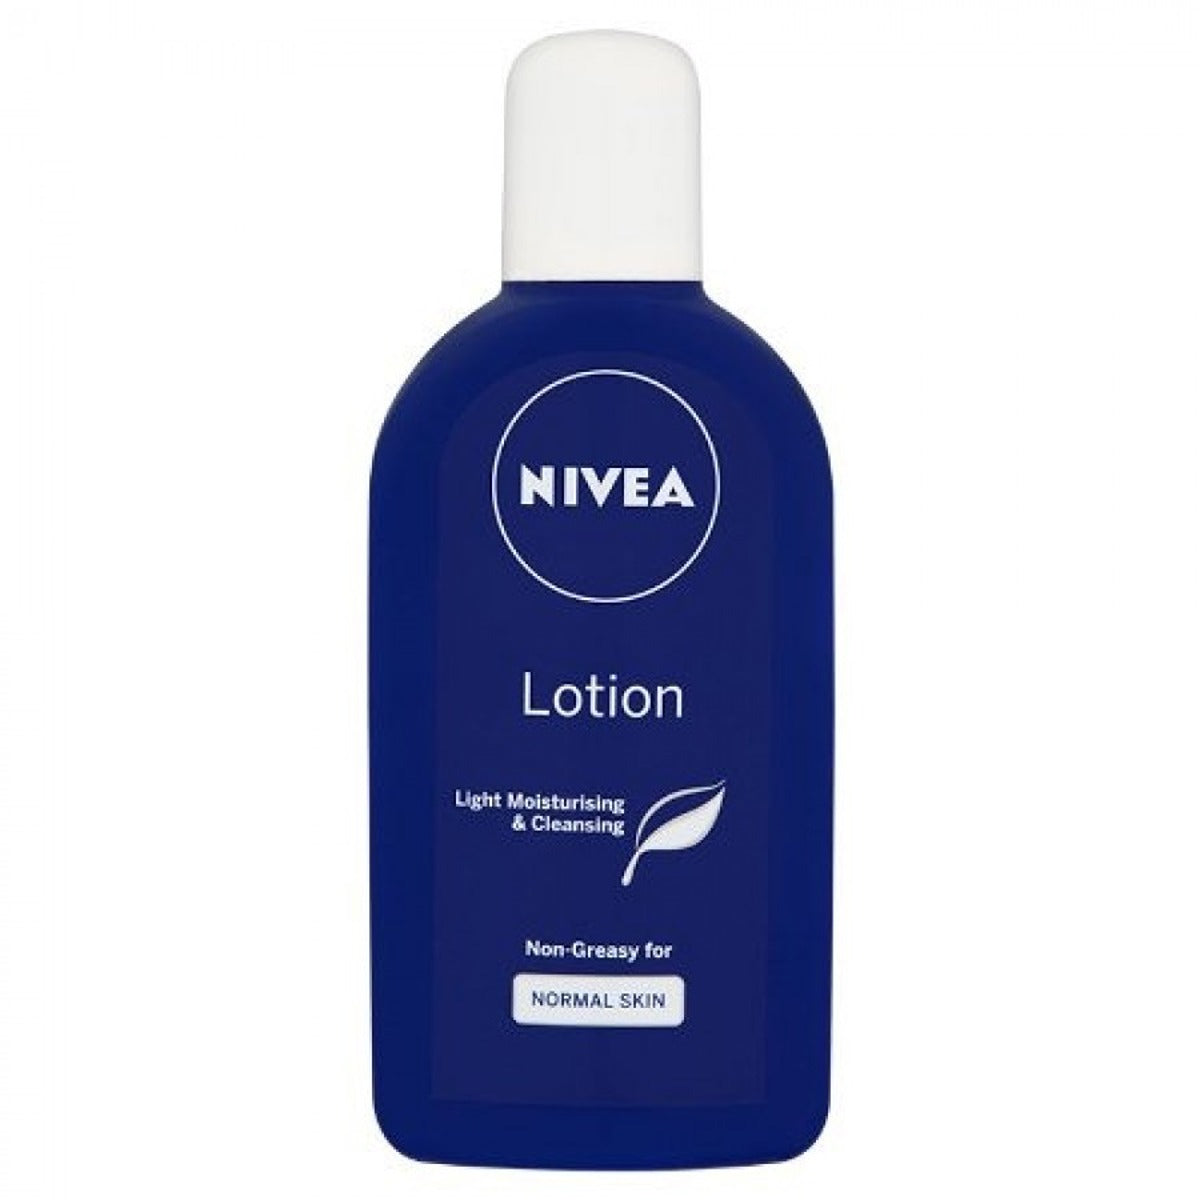 Nivea - Lotion Normal Skin - 250ml - Continental Food Store